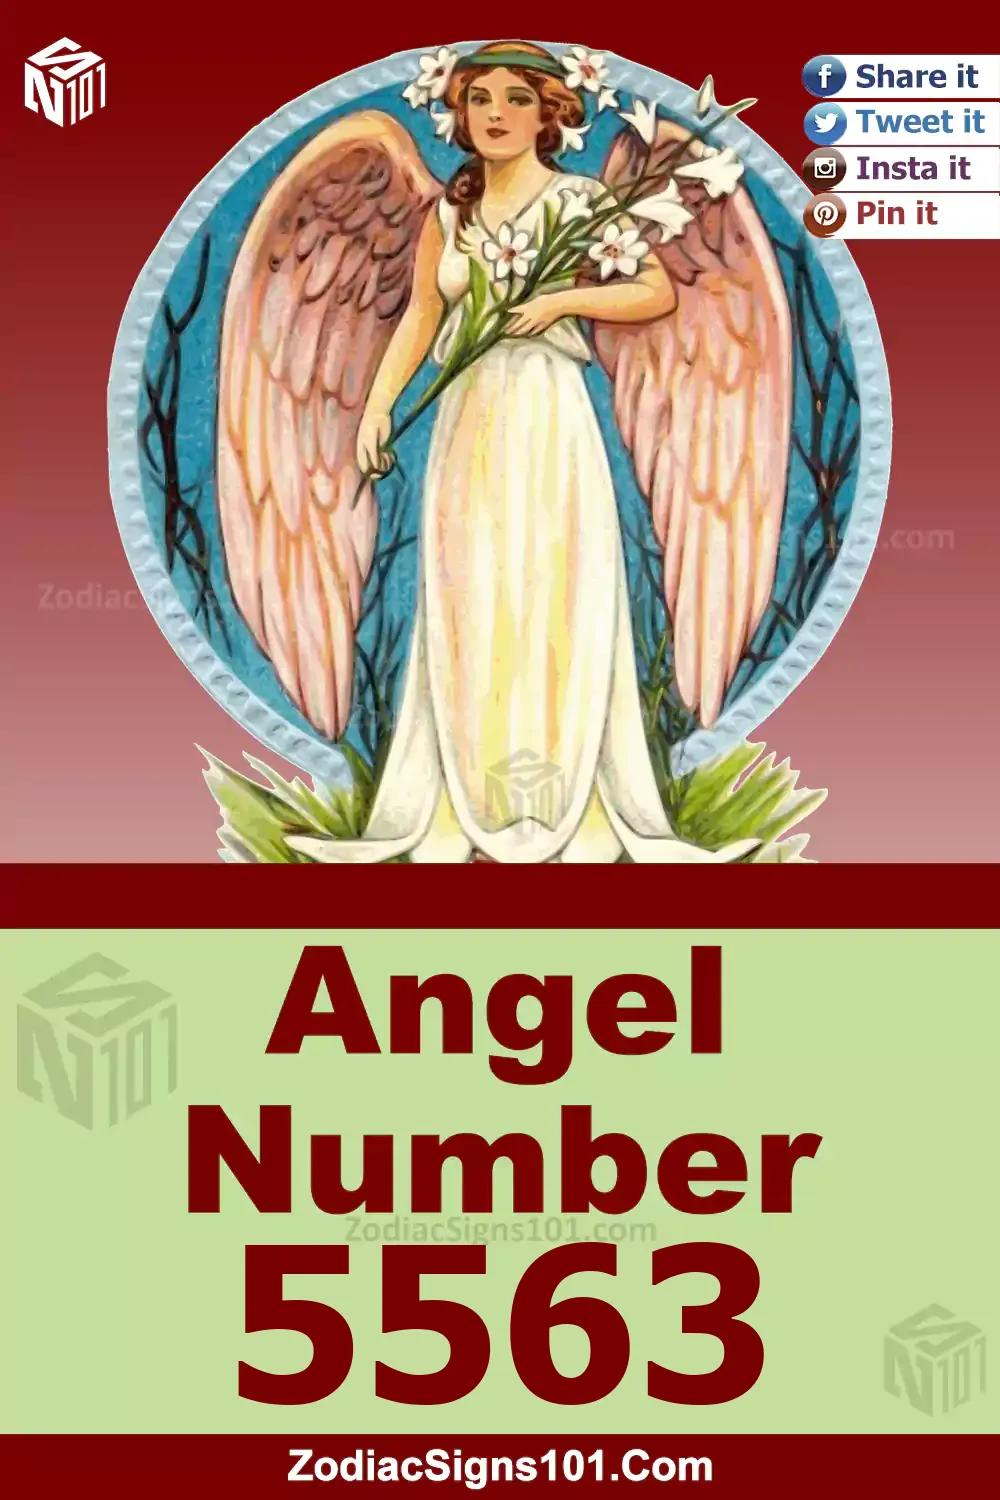 5563-Angel-Number-Meaning.jpg